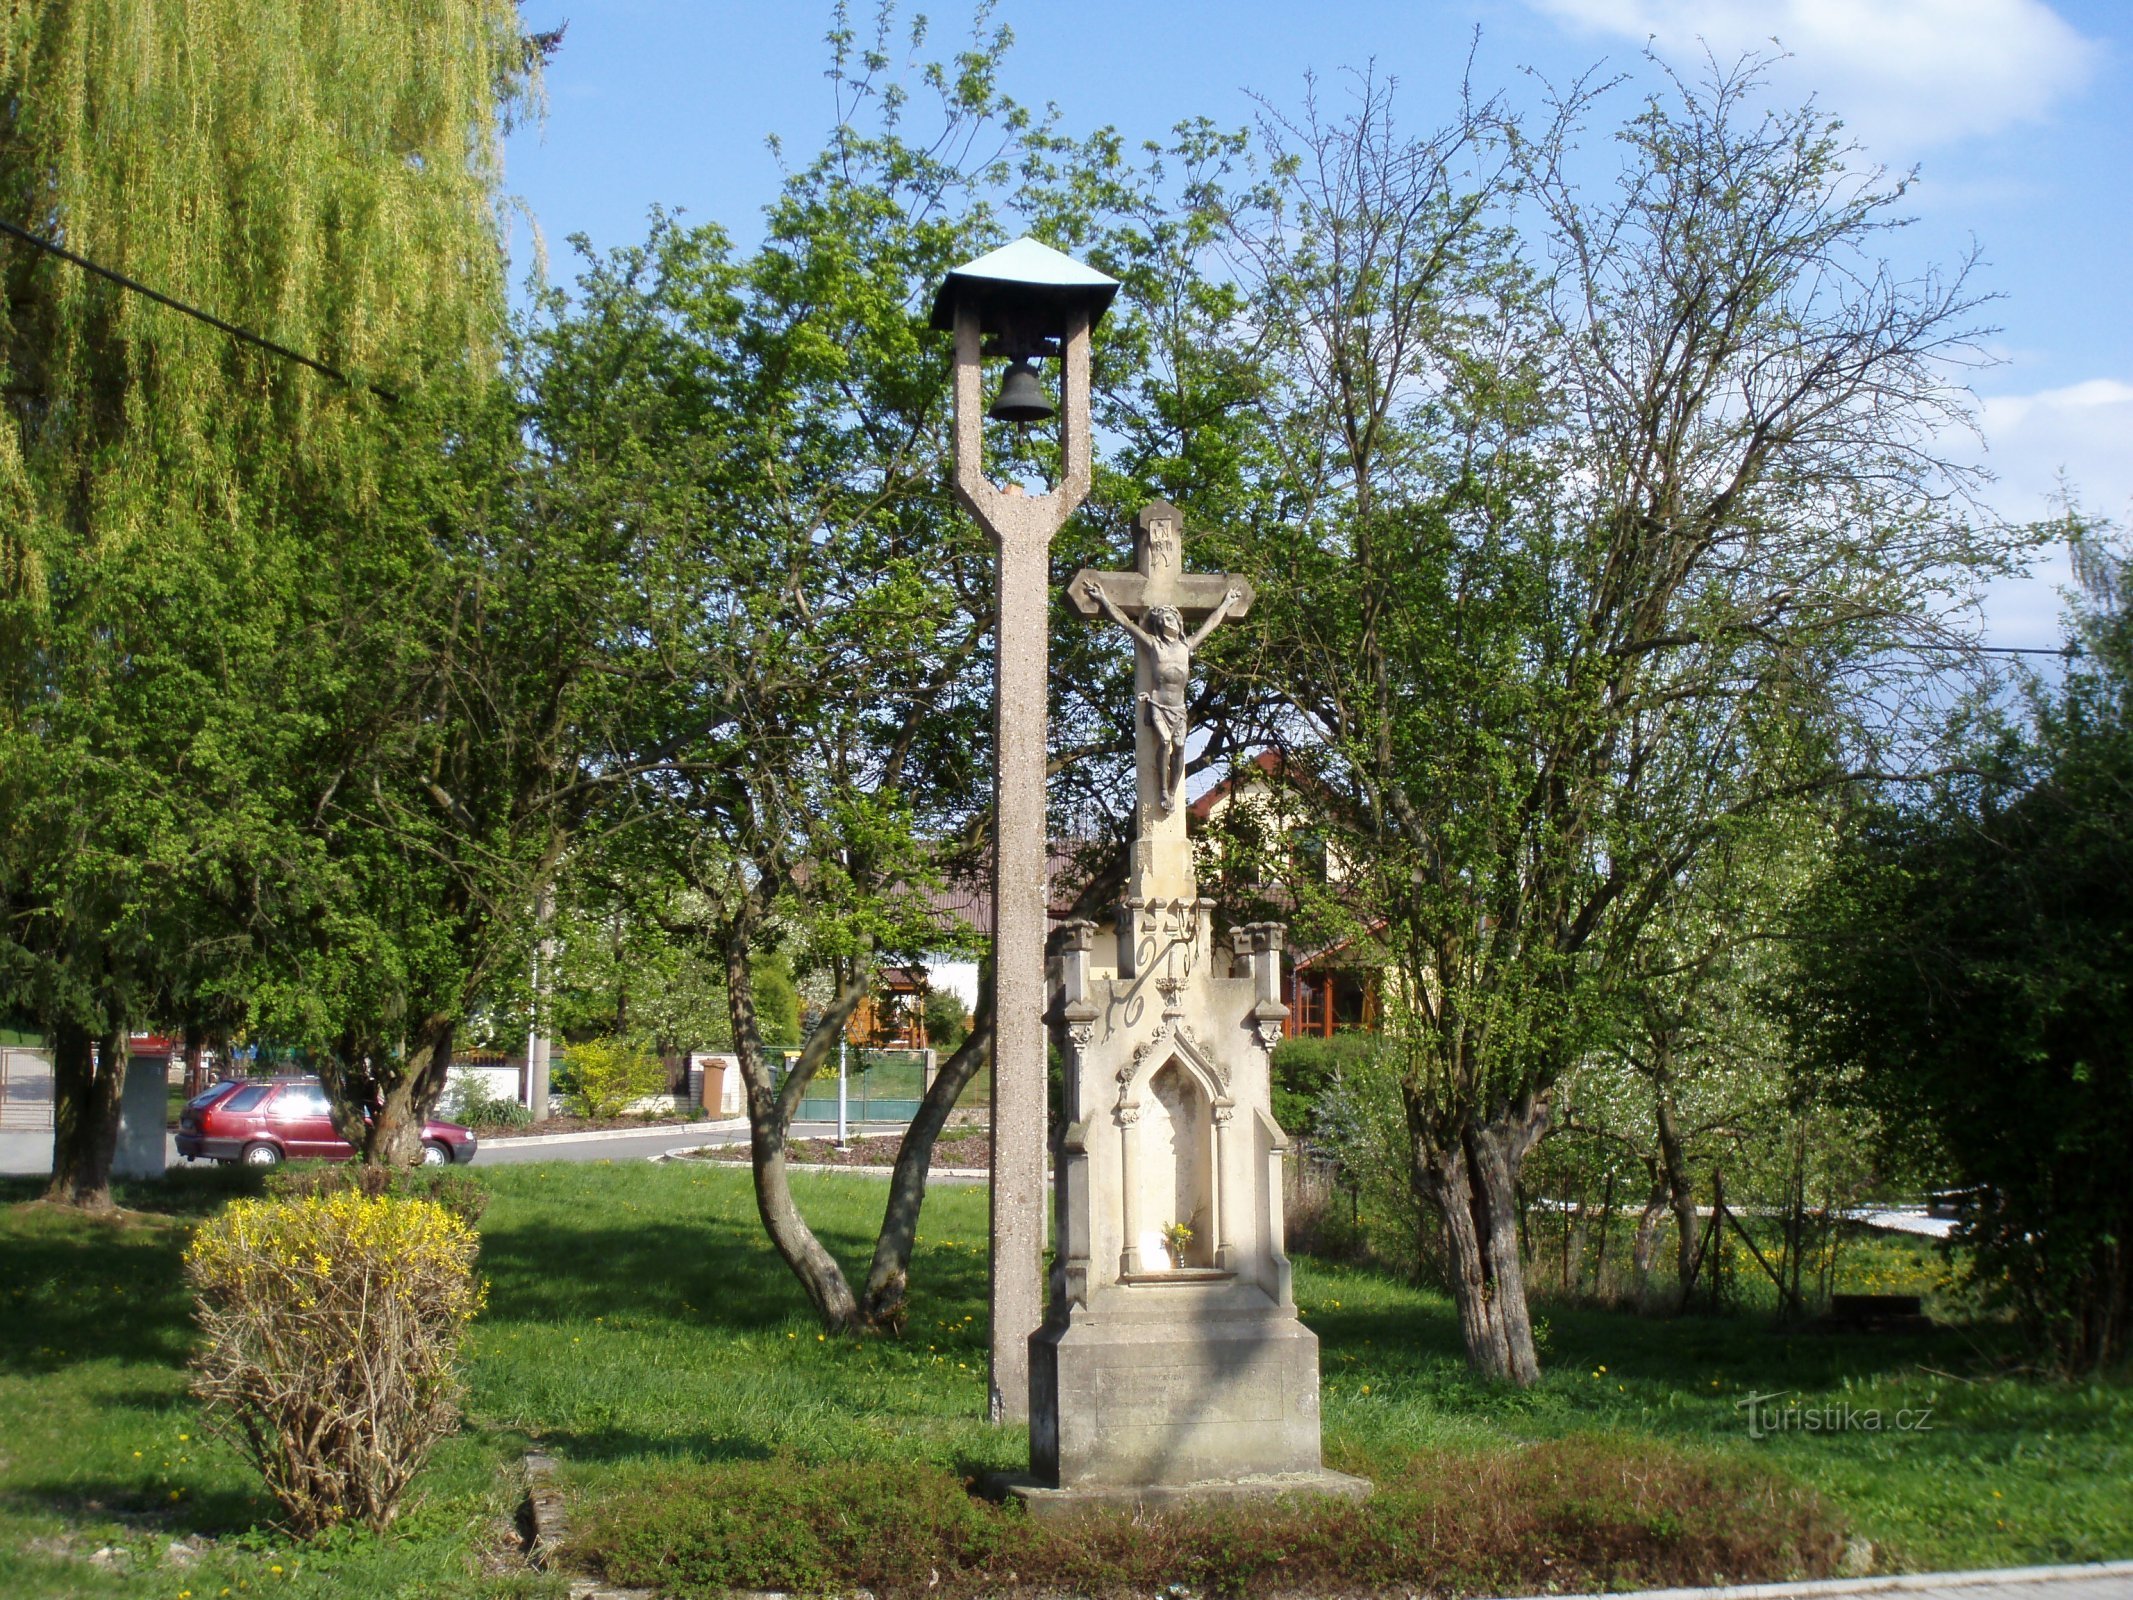 Dzwonnica i krzyż w Roudničce (Hradec Králové, 20.4.2009)